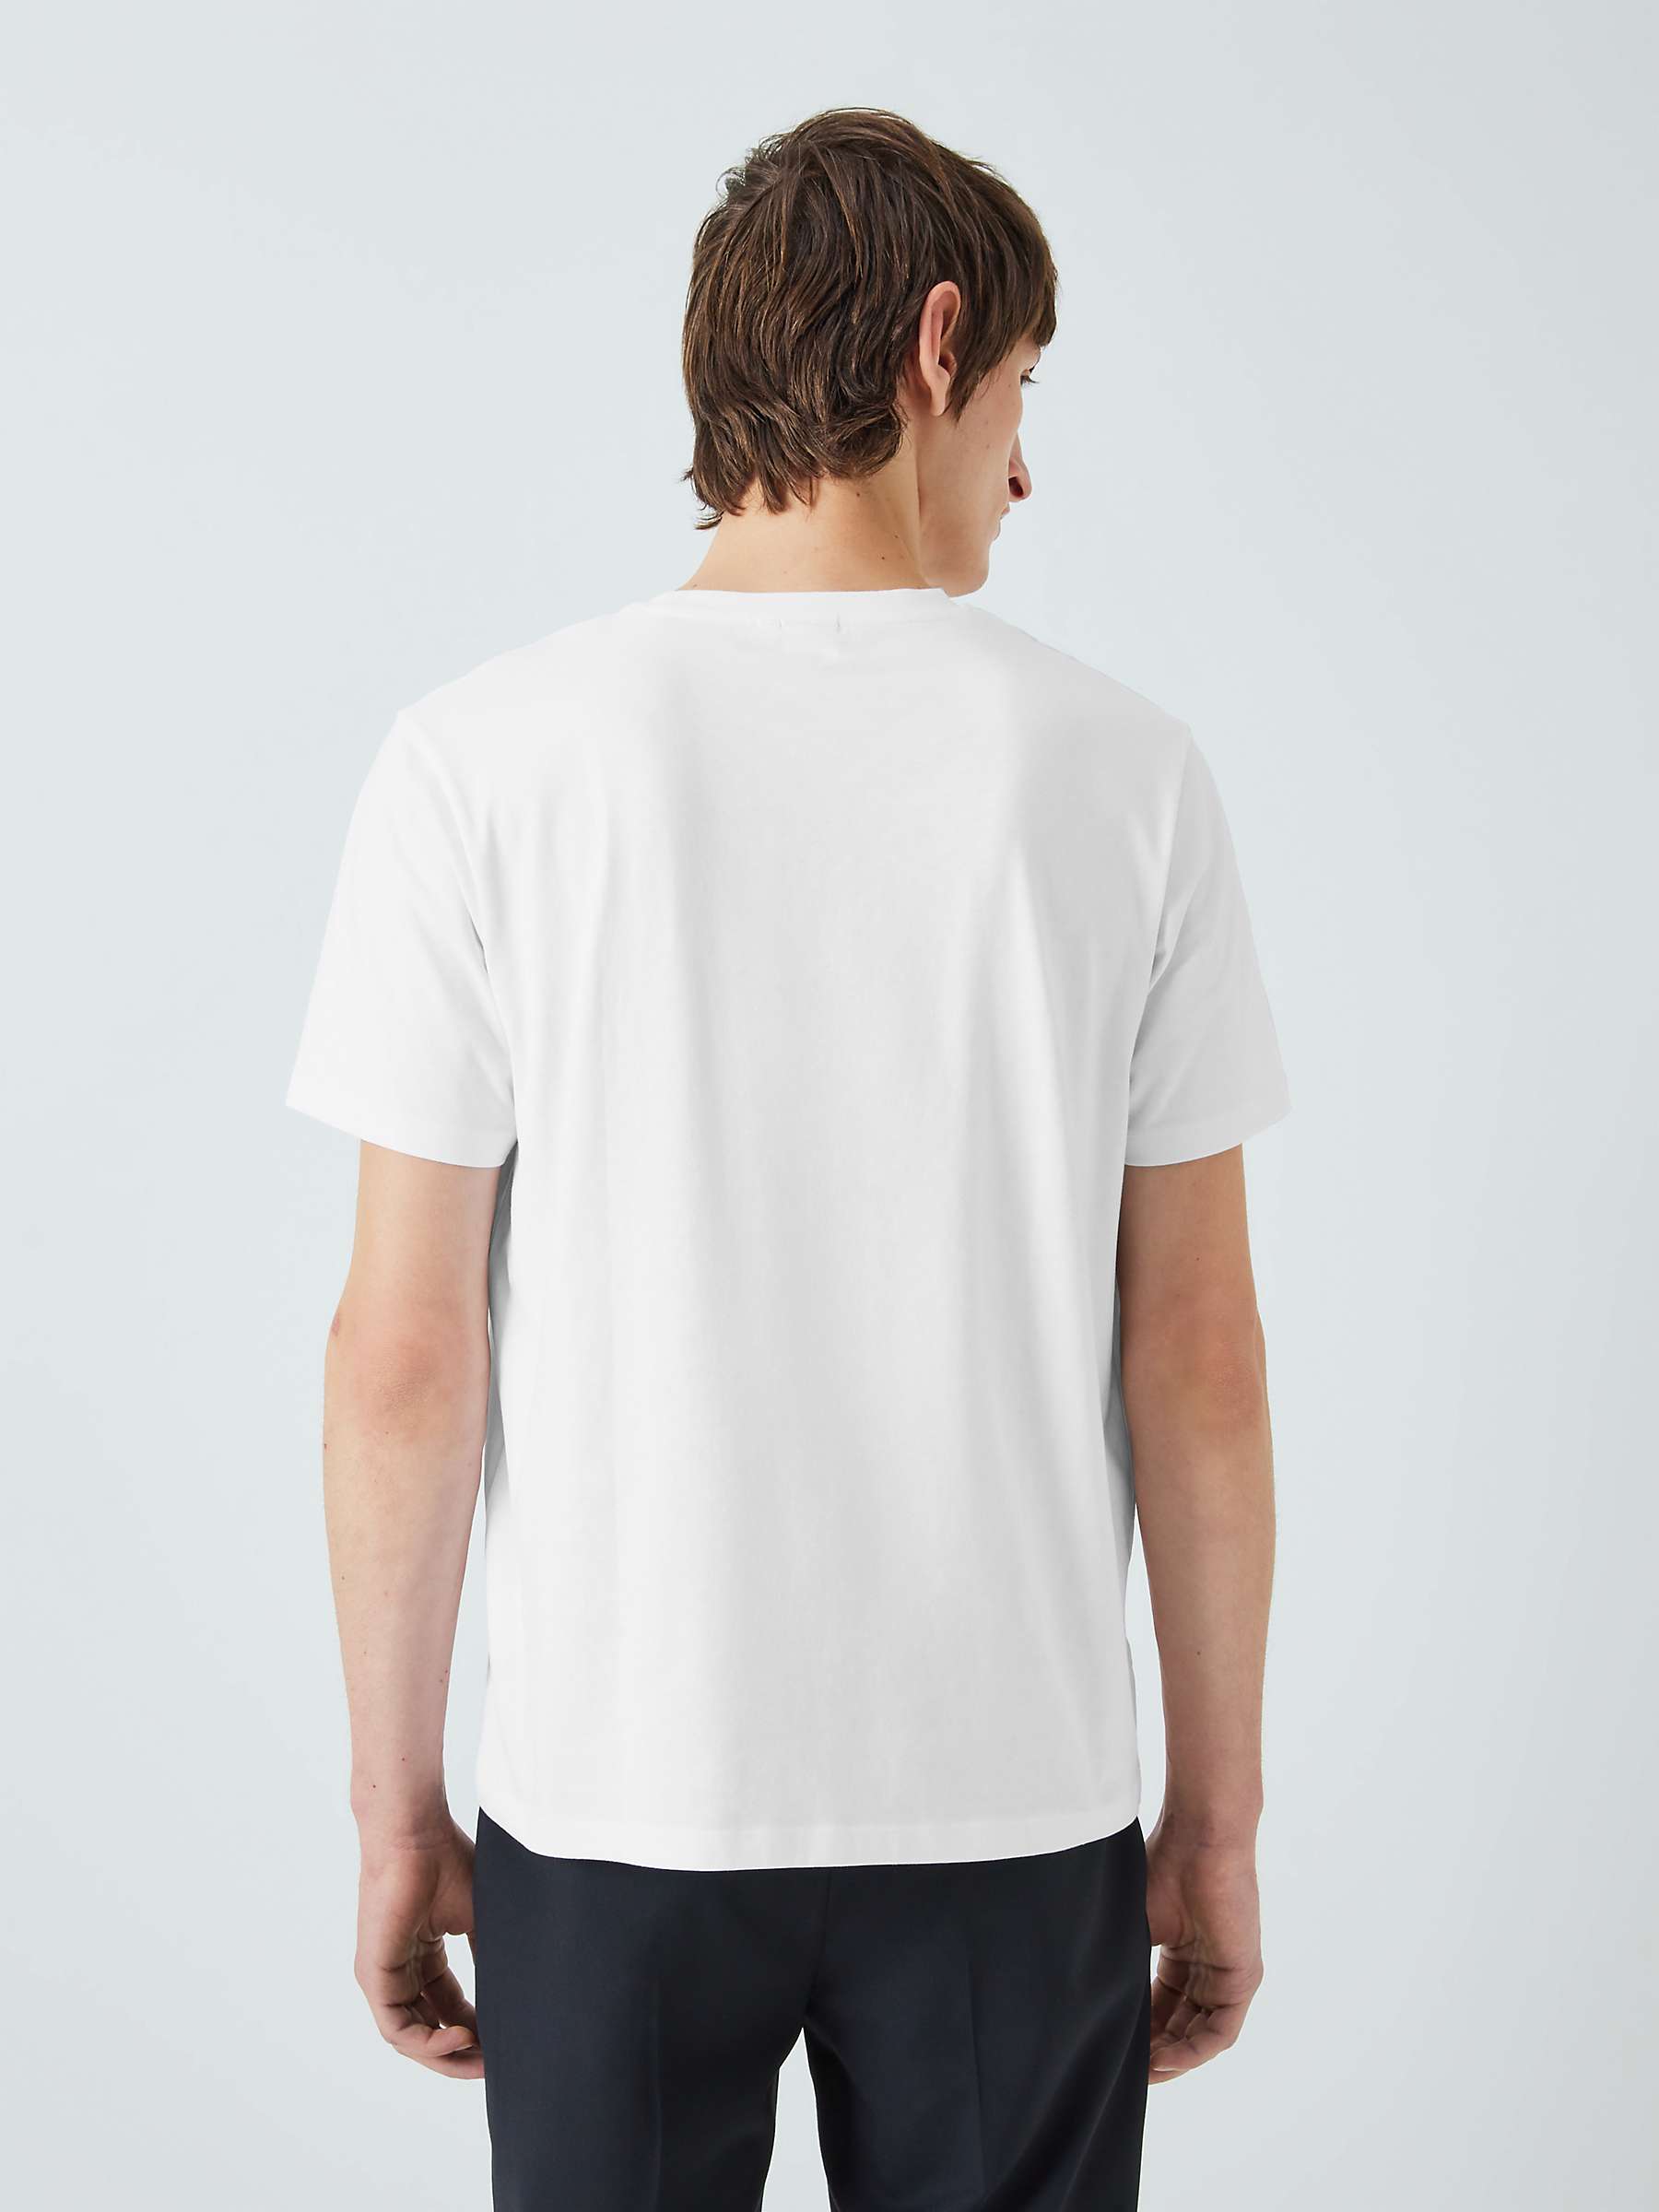 Buy Kin Logo Cotton T-Shirt Online at johnlewis.com